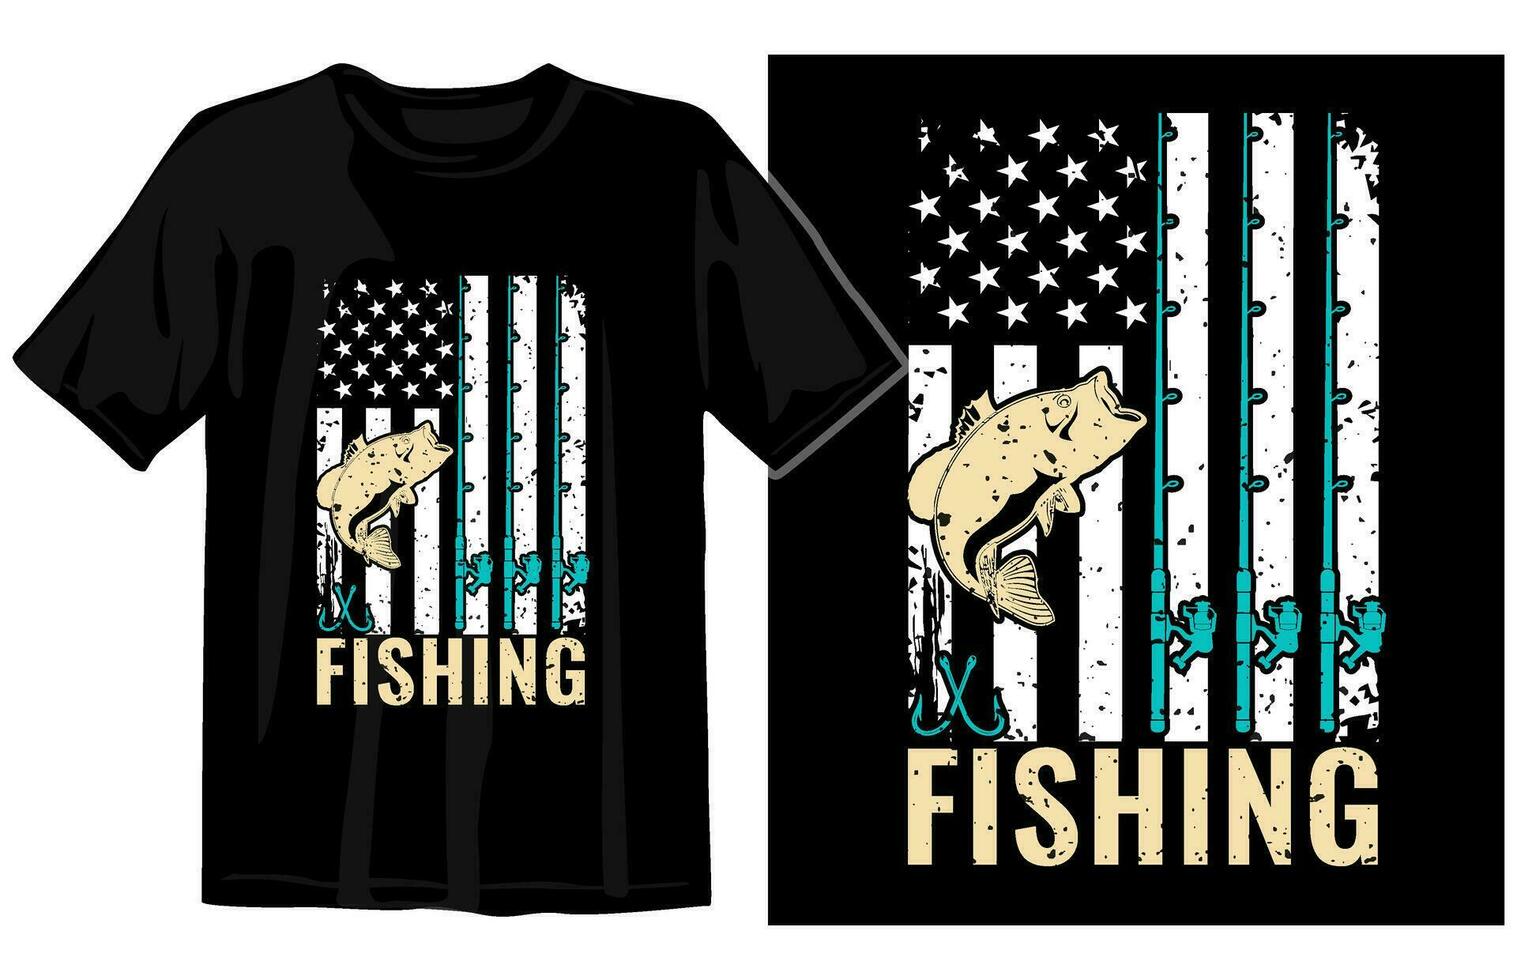 Fishing t shirt vector, Fishing vintage t shirt design, vintage fishing t shirt graphic illustration vector